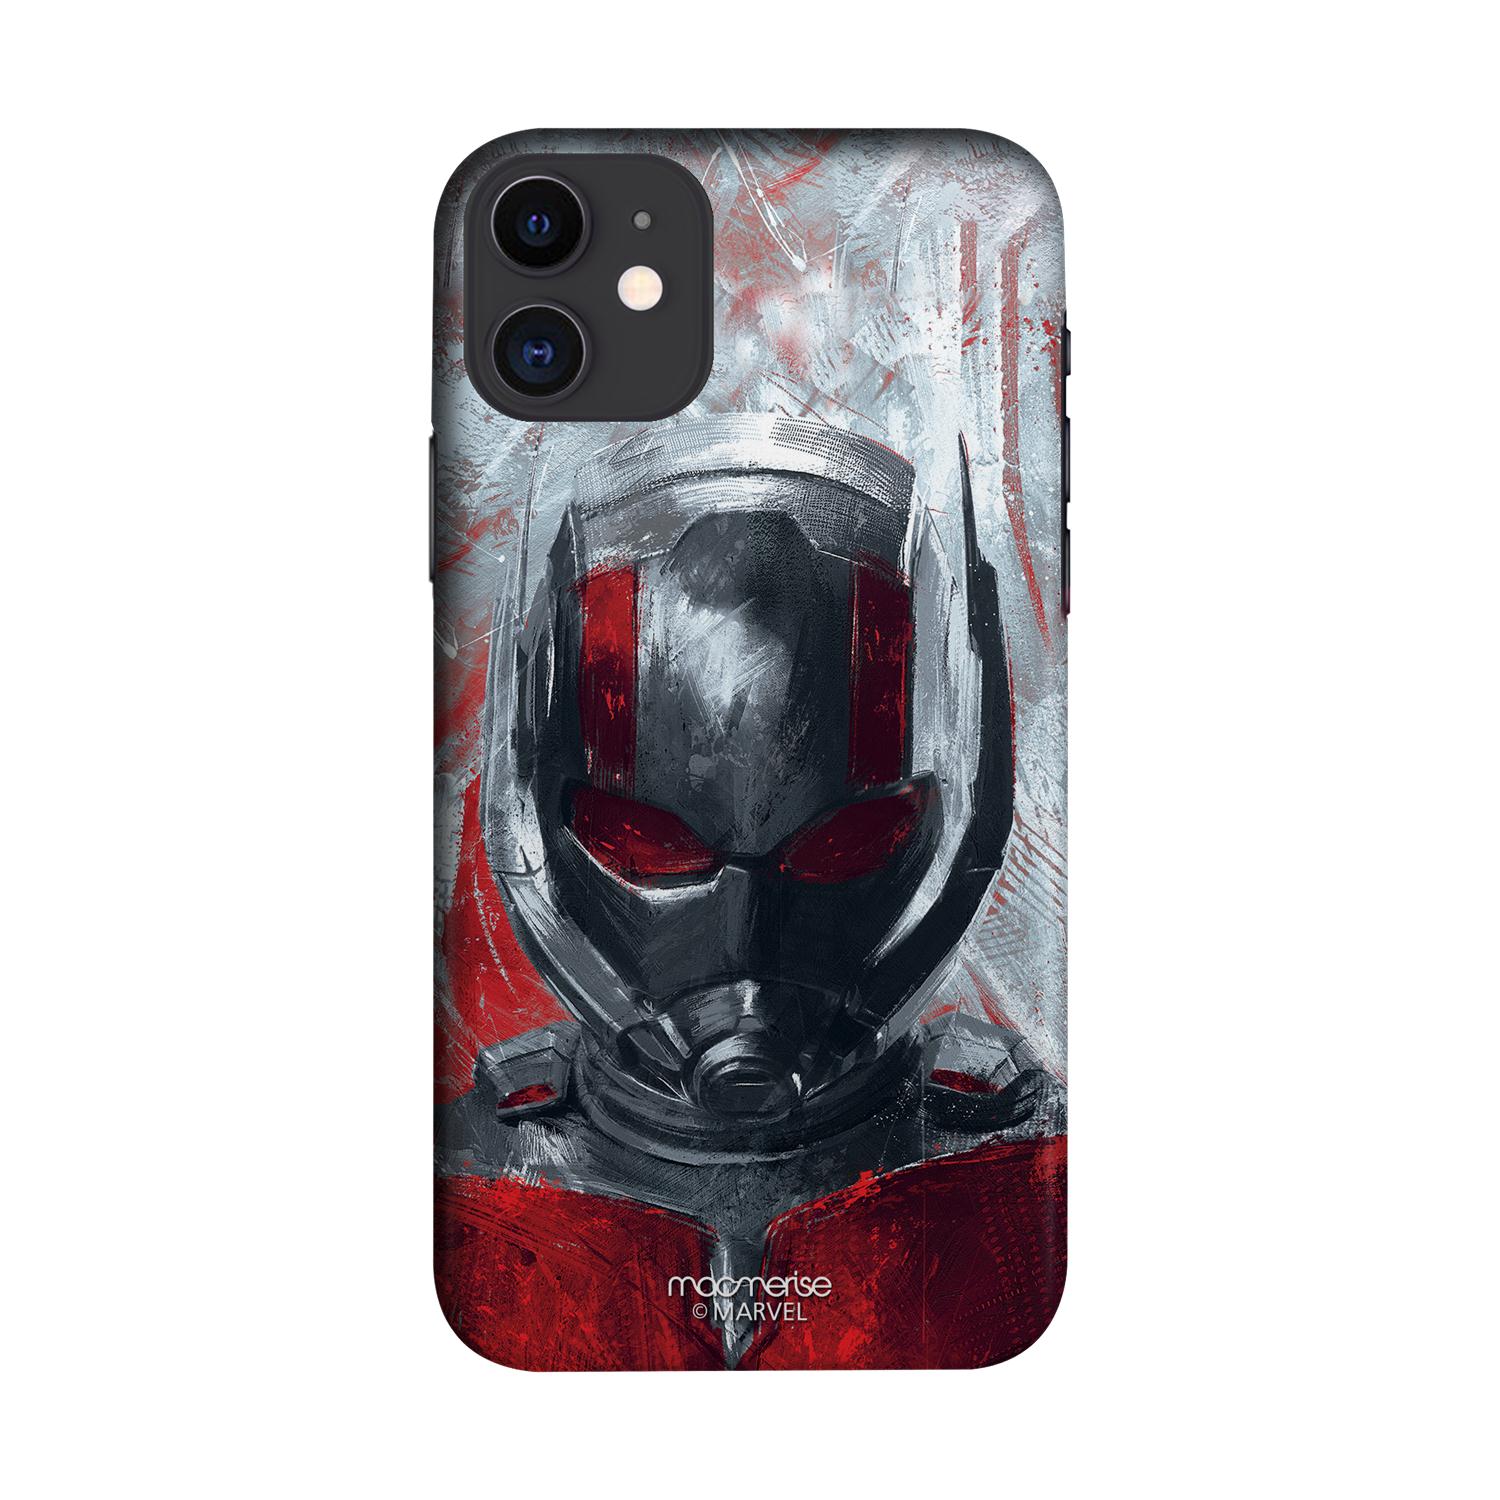 Buy Charcoal Art Antman - Sleek Phone Case for iPhone 11 Online